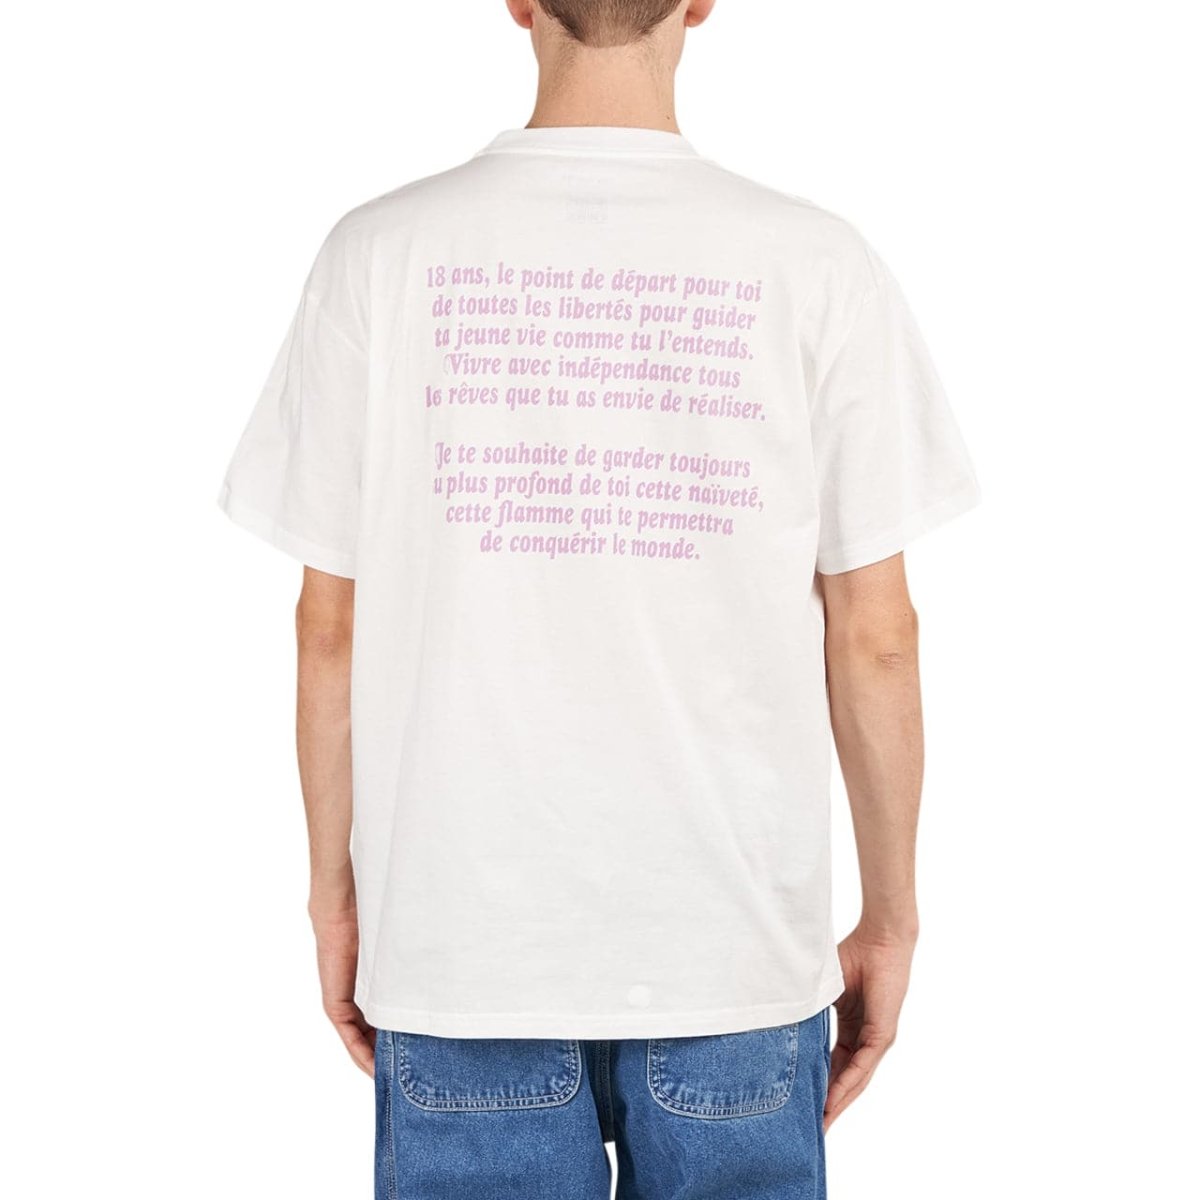 Carhartt WIP x Relevant Parties S/S Ed Banger Shirt (Weiß)  - Allike Store